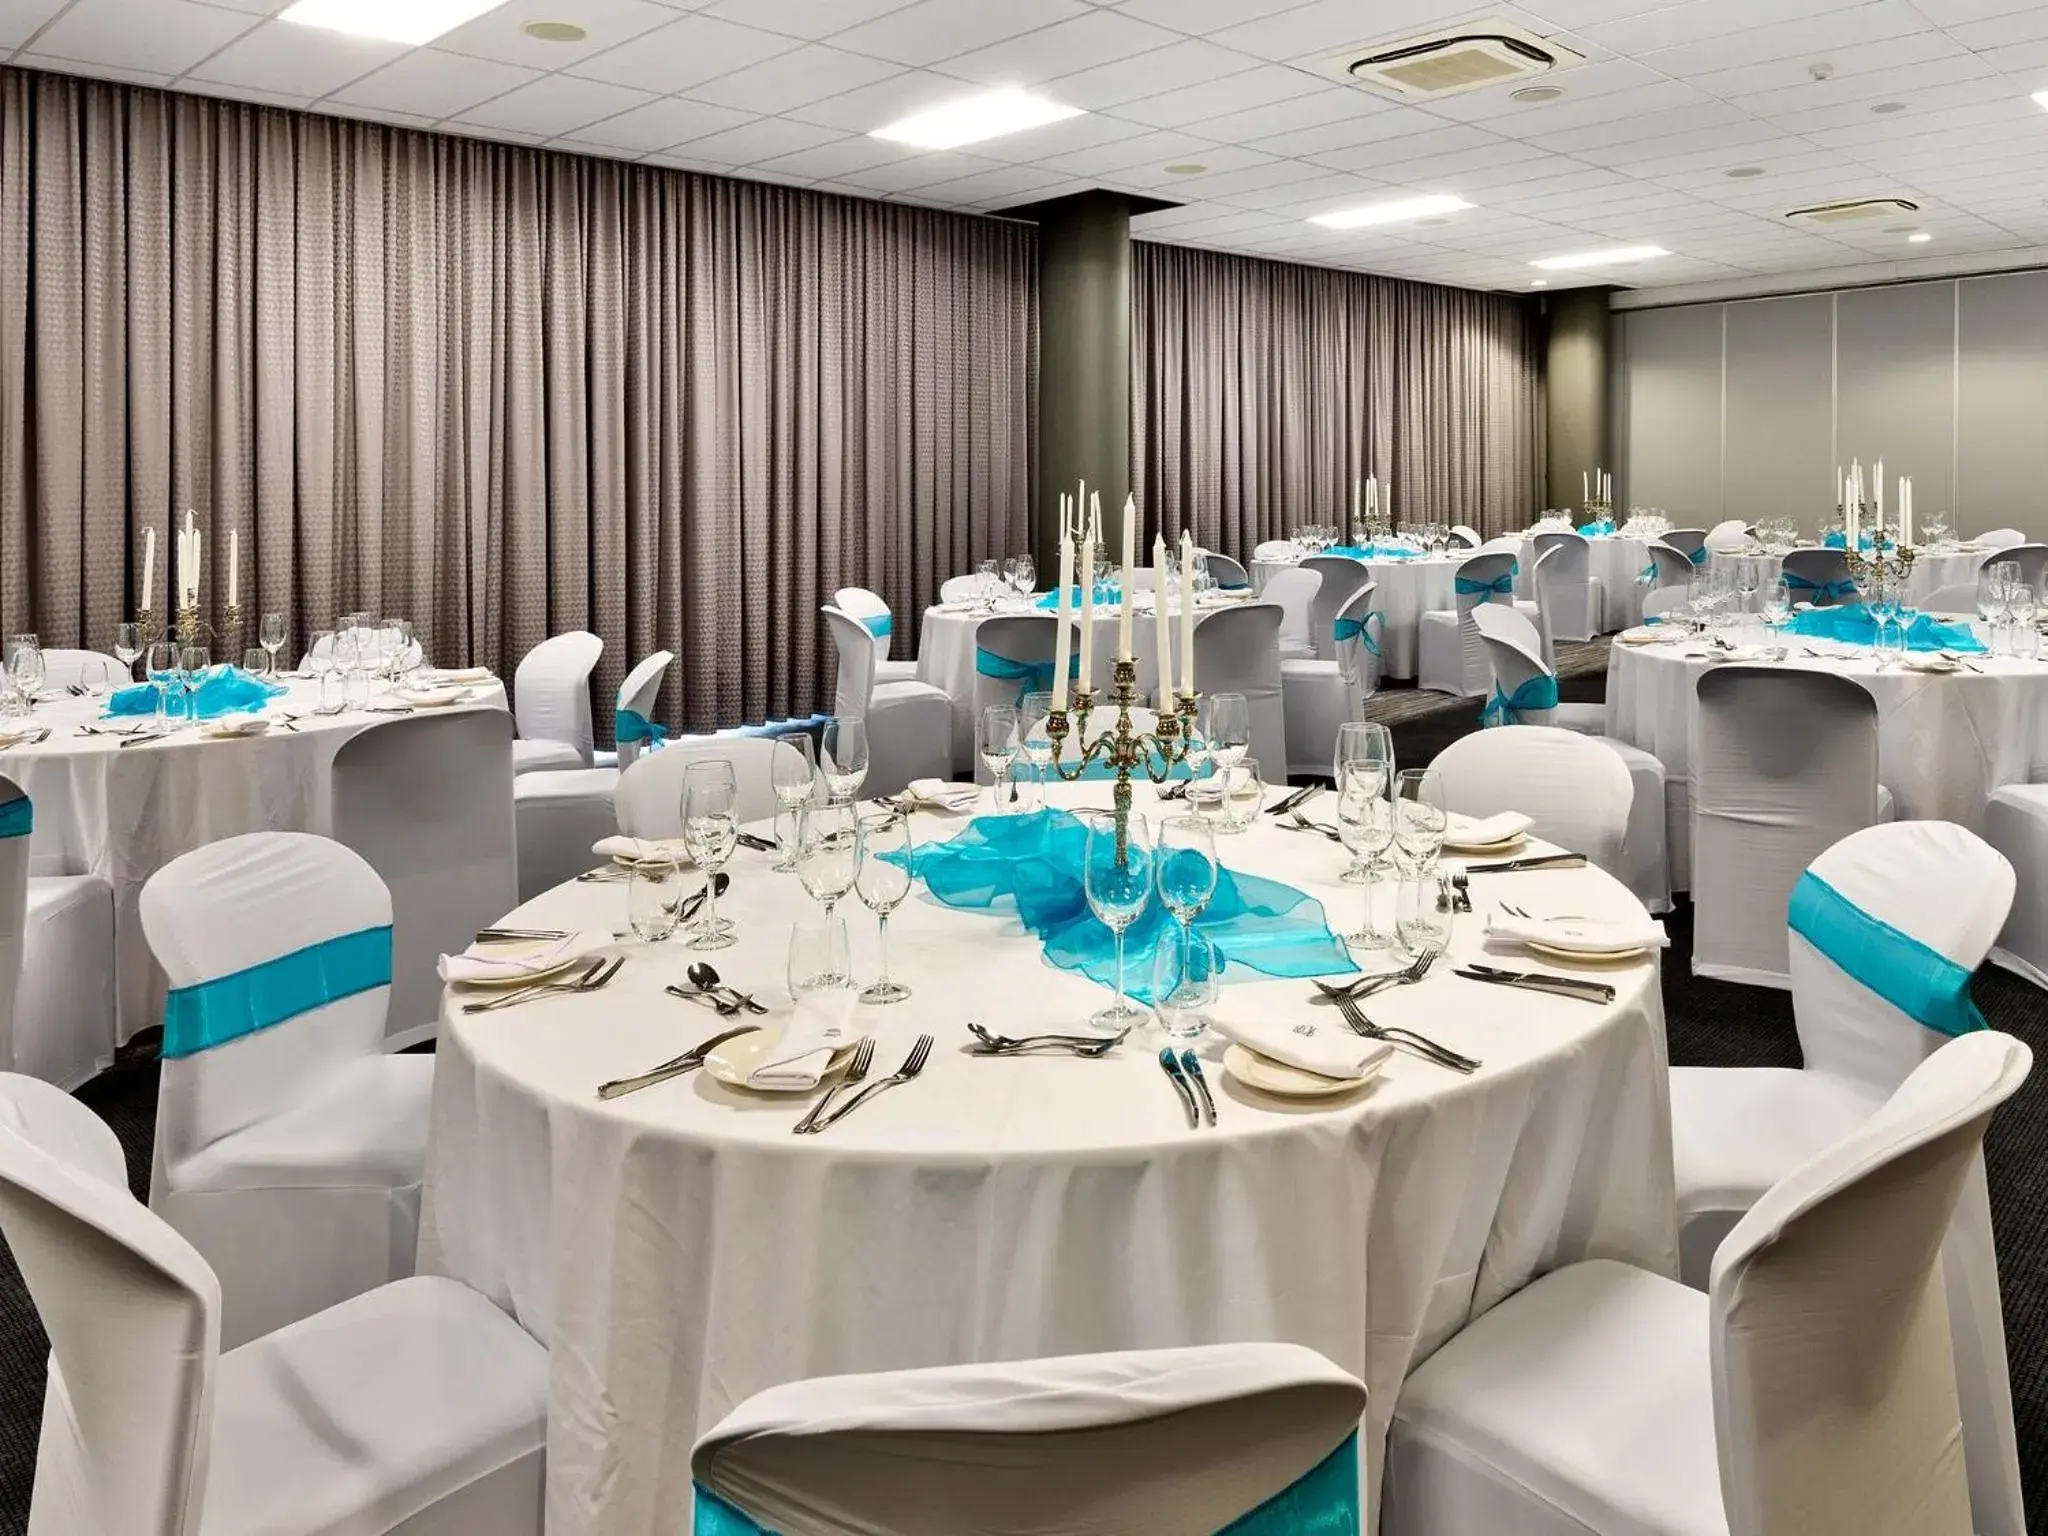 Banquet/Function facilities, Banquet Facilities in Krystal Beach Hotel